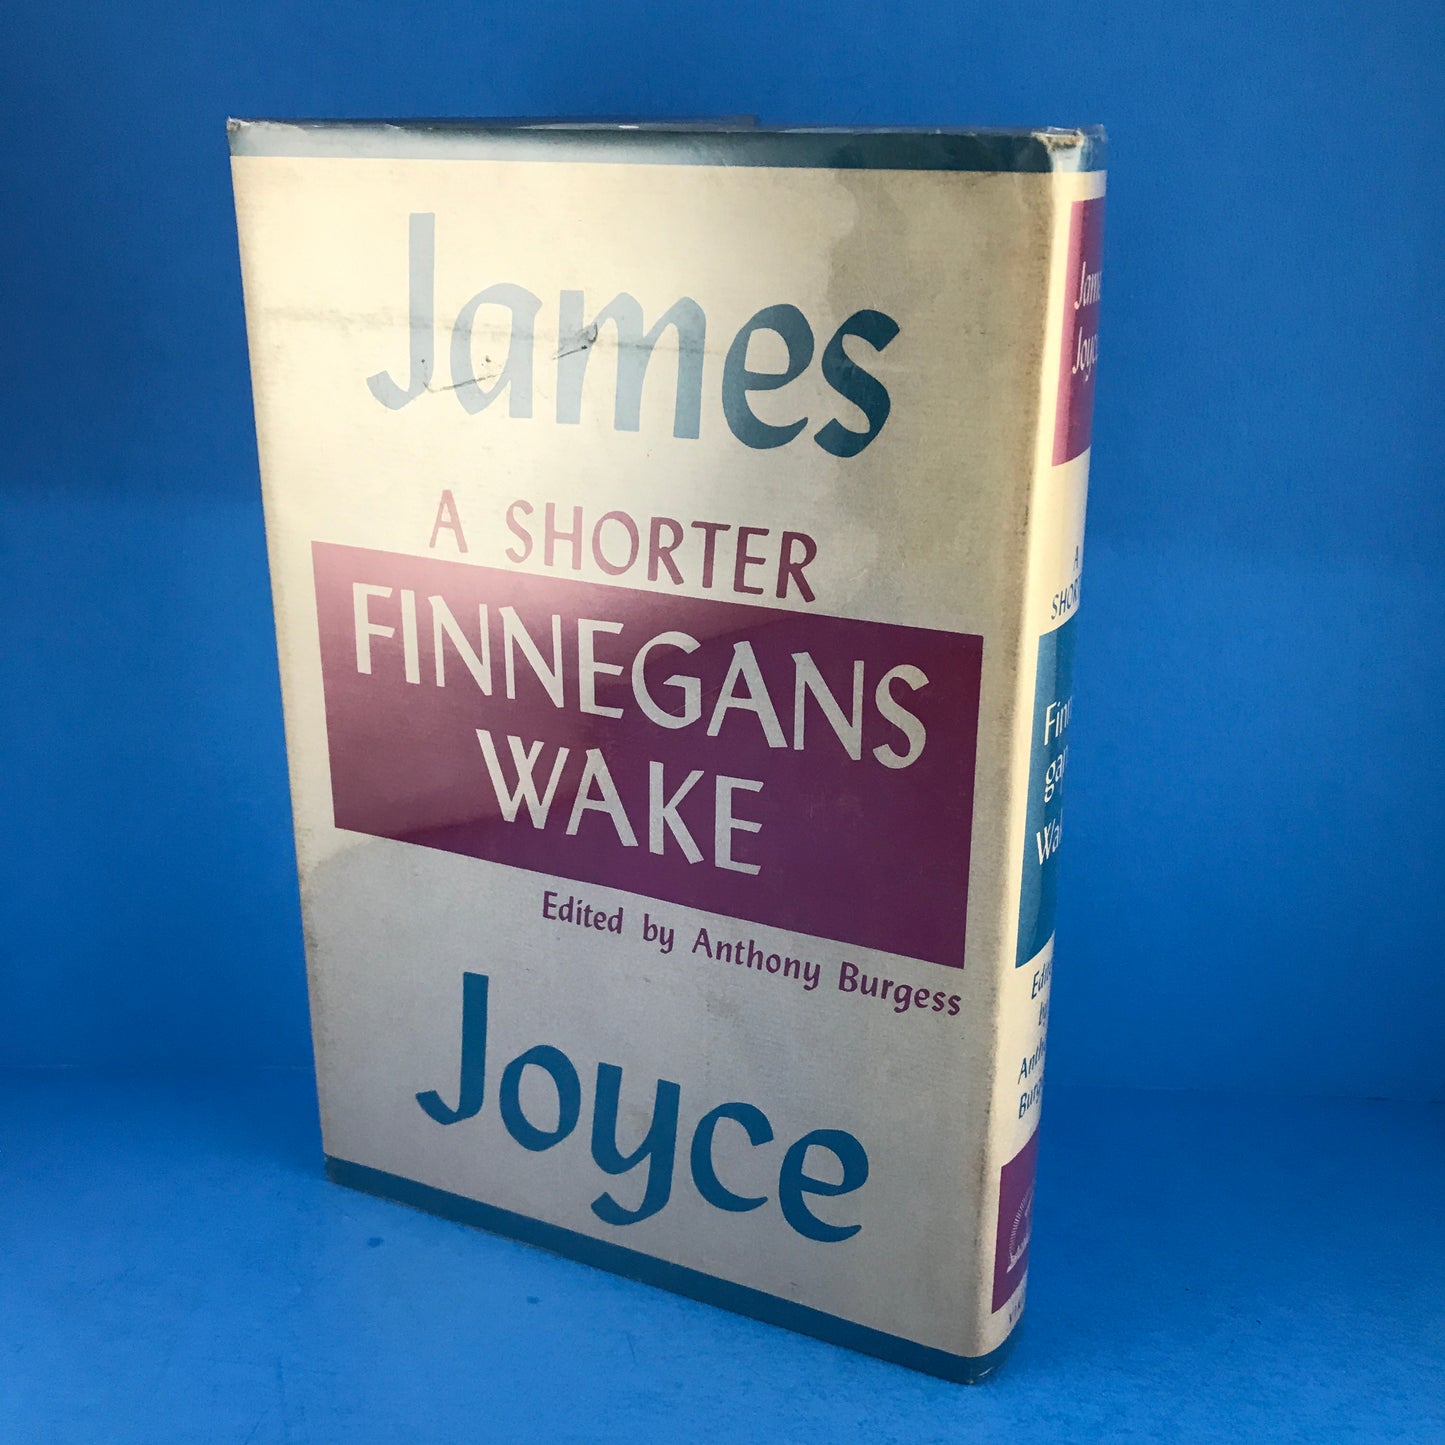 A Shorter Finnegan's Wake